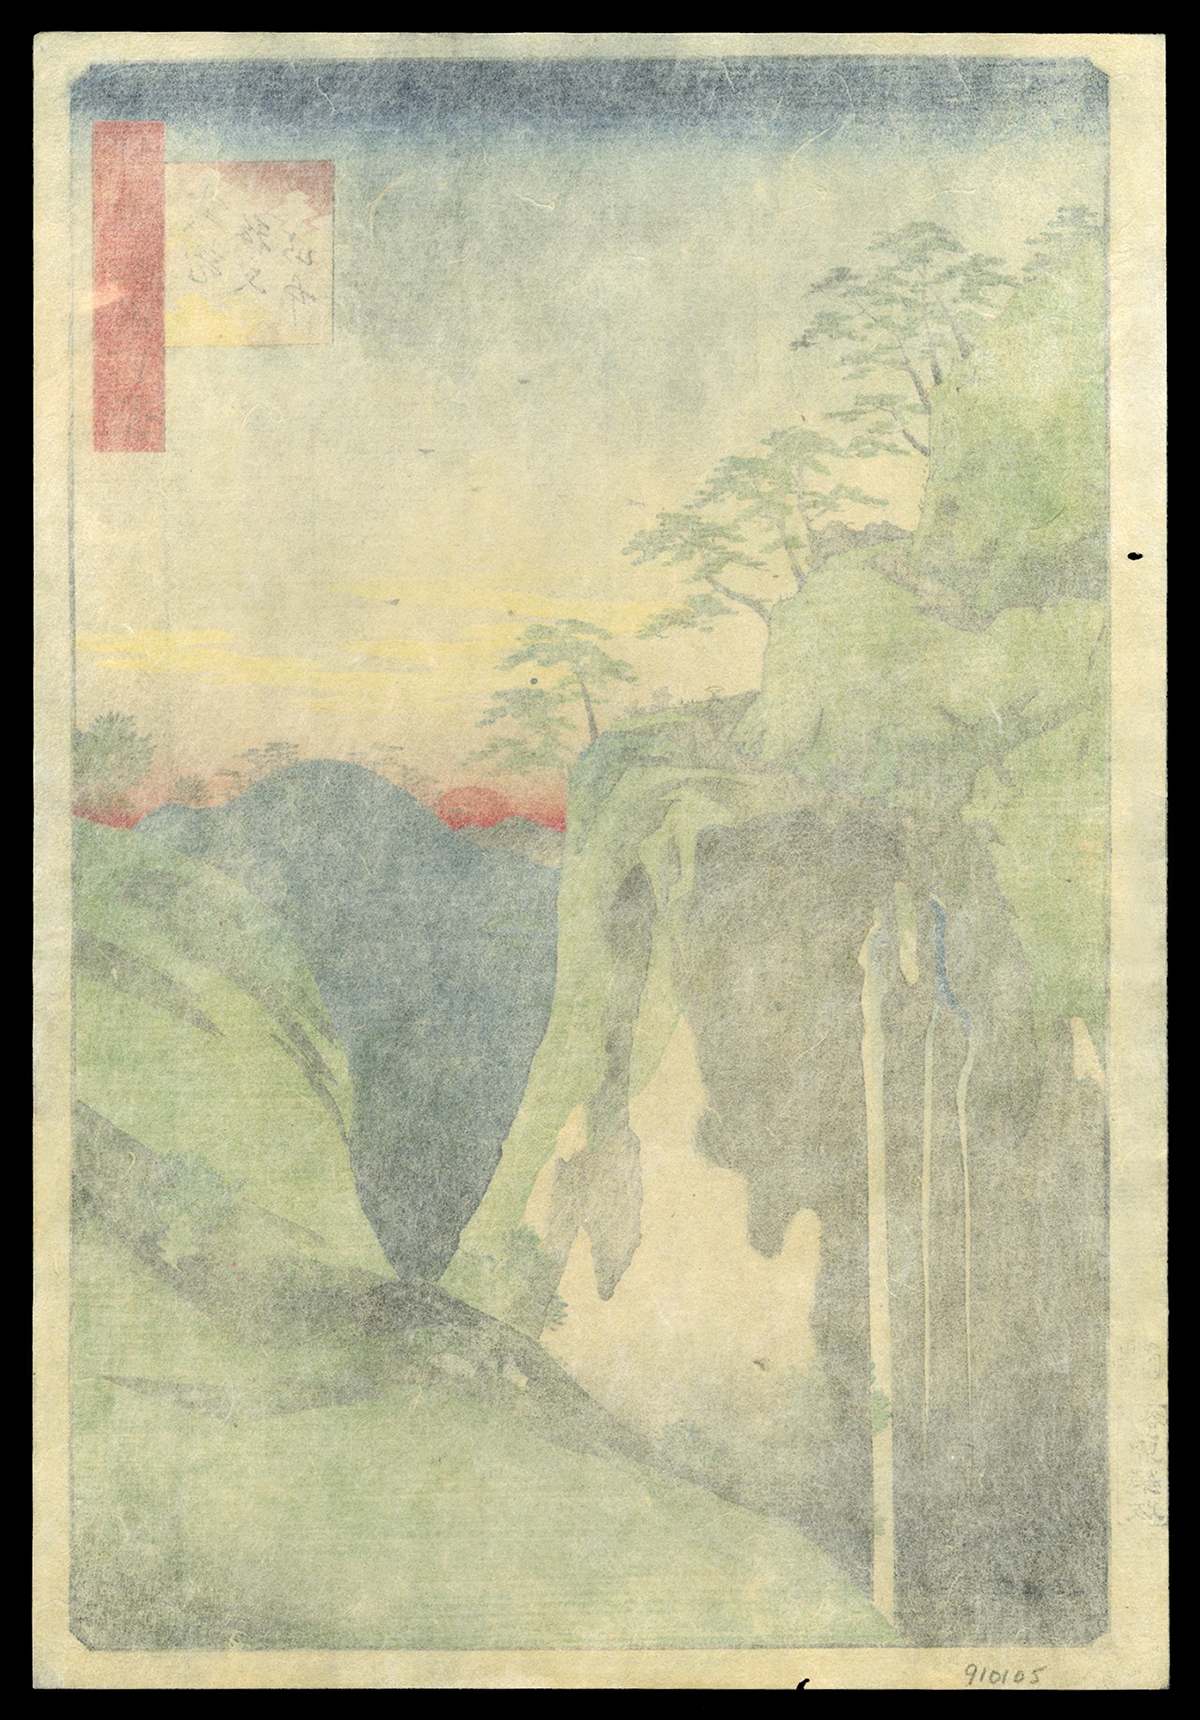 Artwork by Utagawa Hiroshige, Ando Hiroshige II - In the Chichibu Mountains in Musashi Province, Made of woodblock